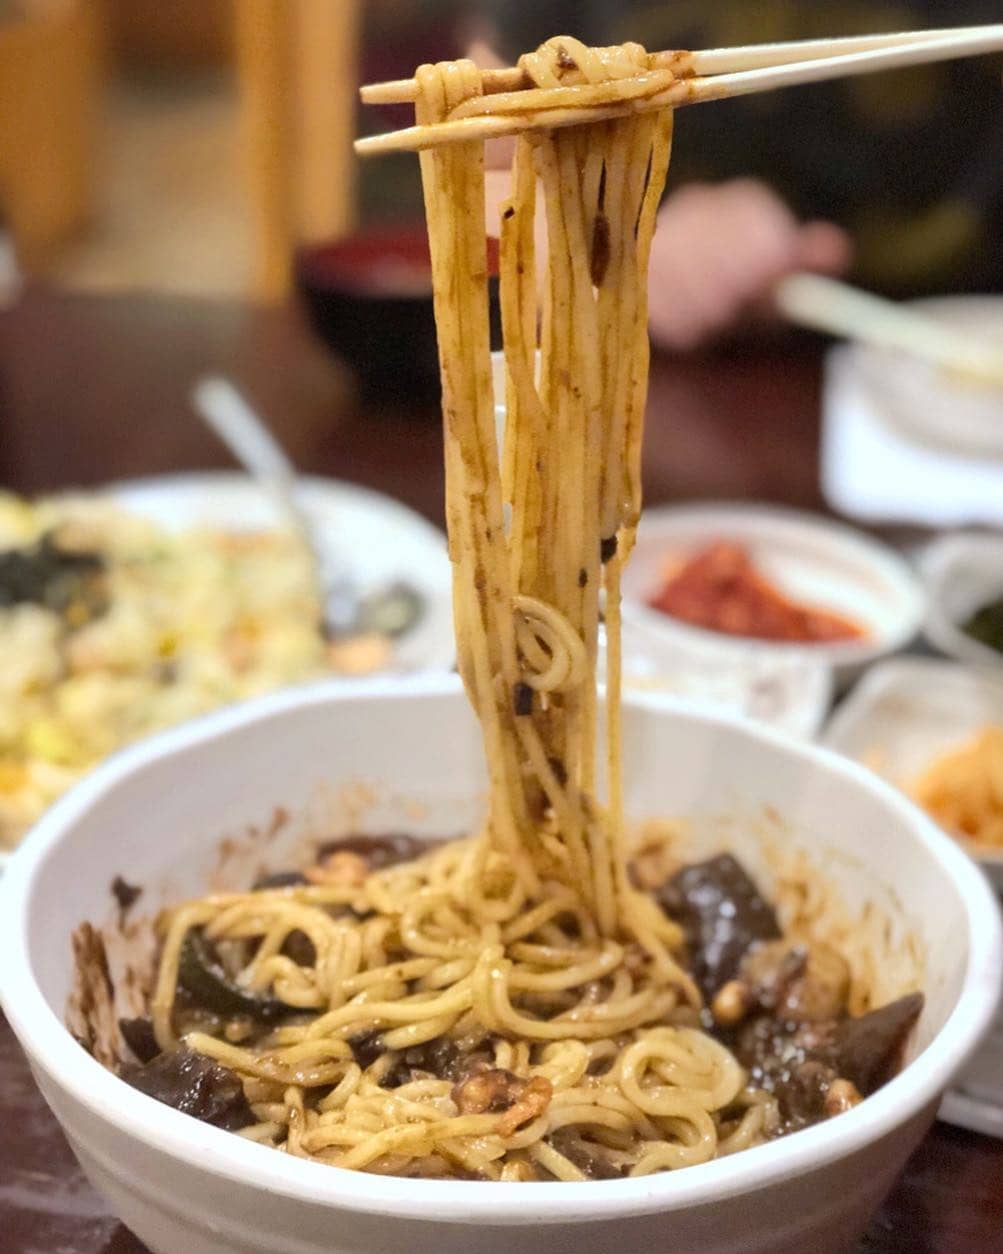 best korean restaurant in richmond - dai jang kum picking up noodles from bowl with chopsticks